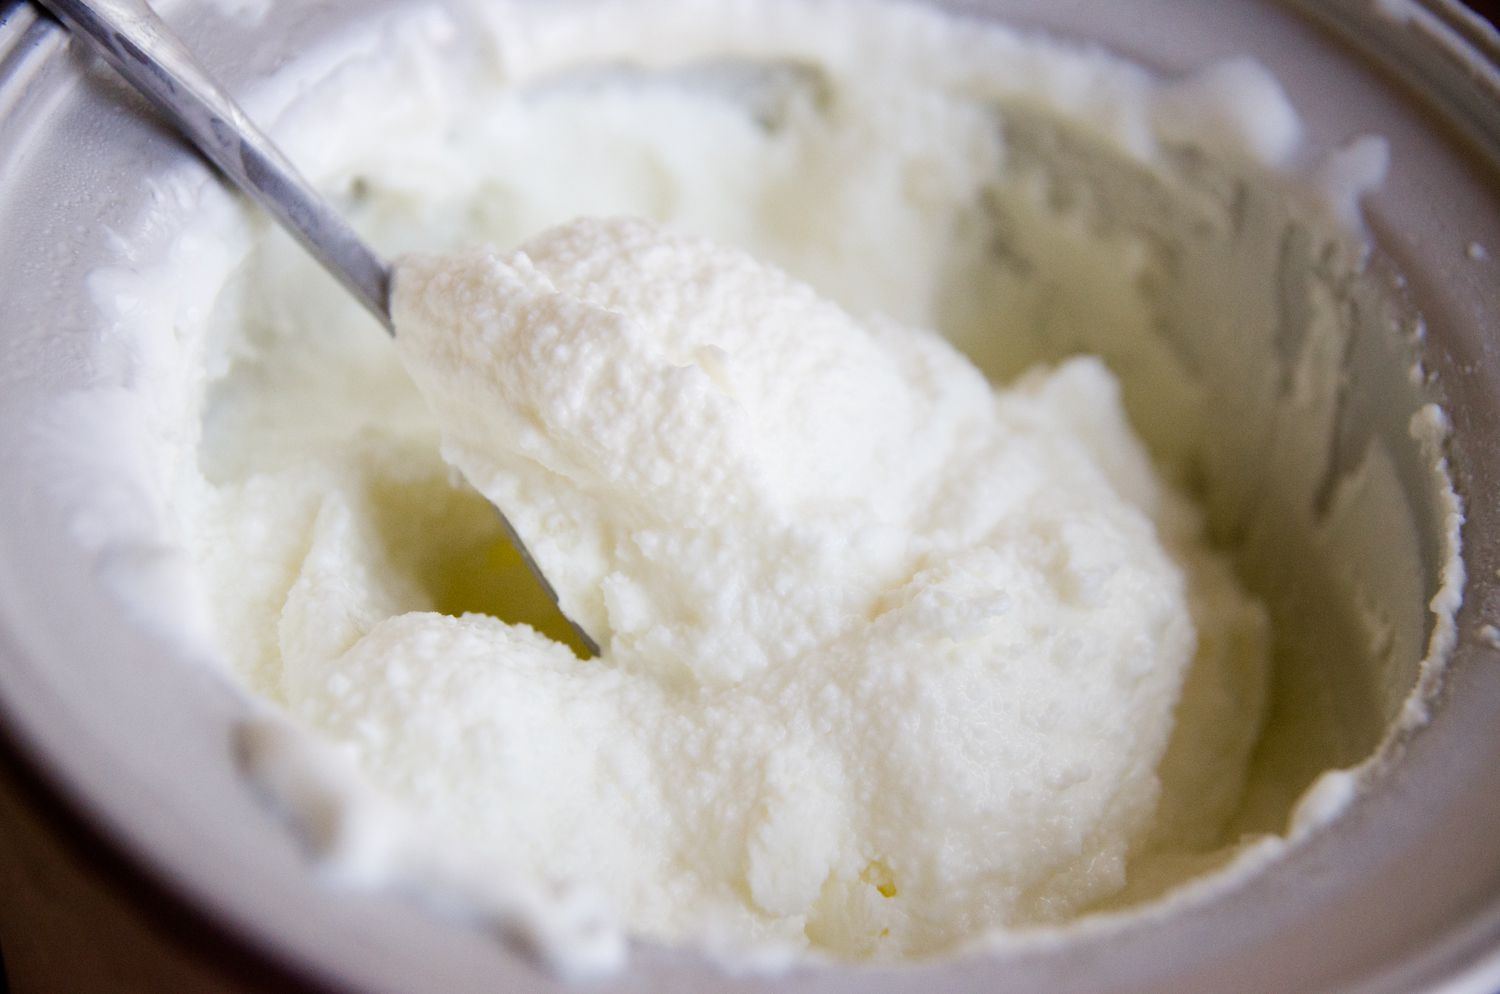 Churning just plain yogurt makes a delicious slushy (but it will freeze rock hard).